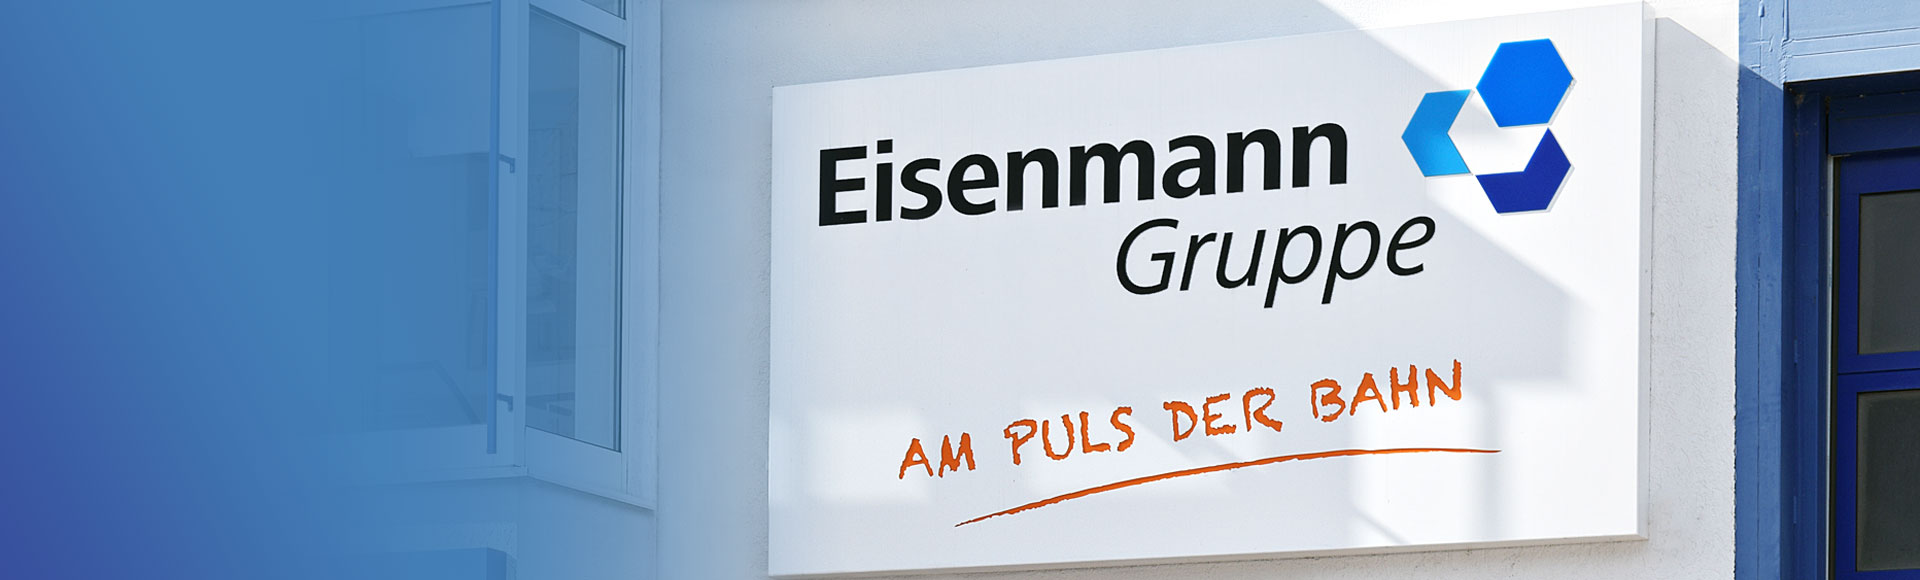 Eisenmann-Gruppe